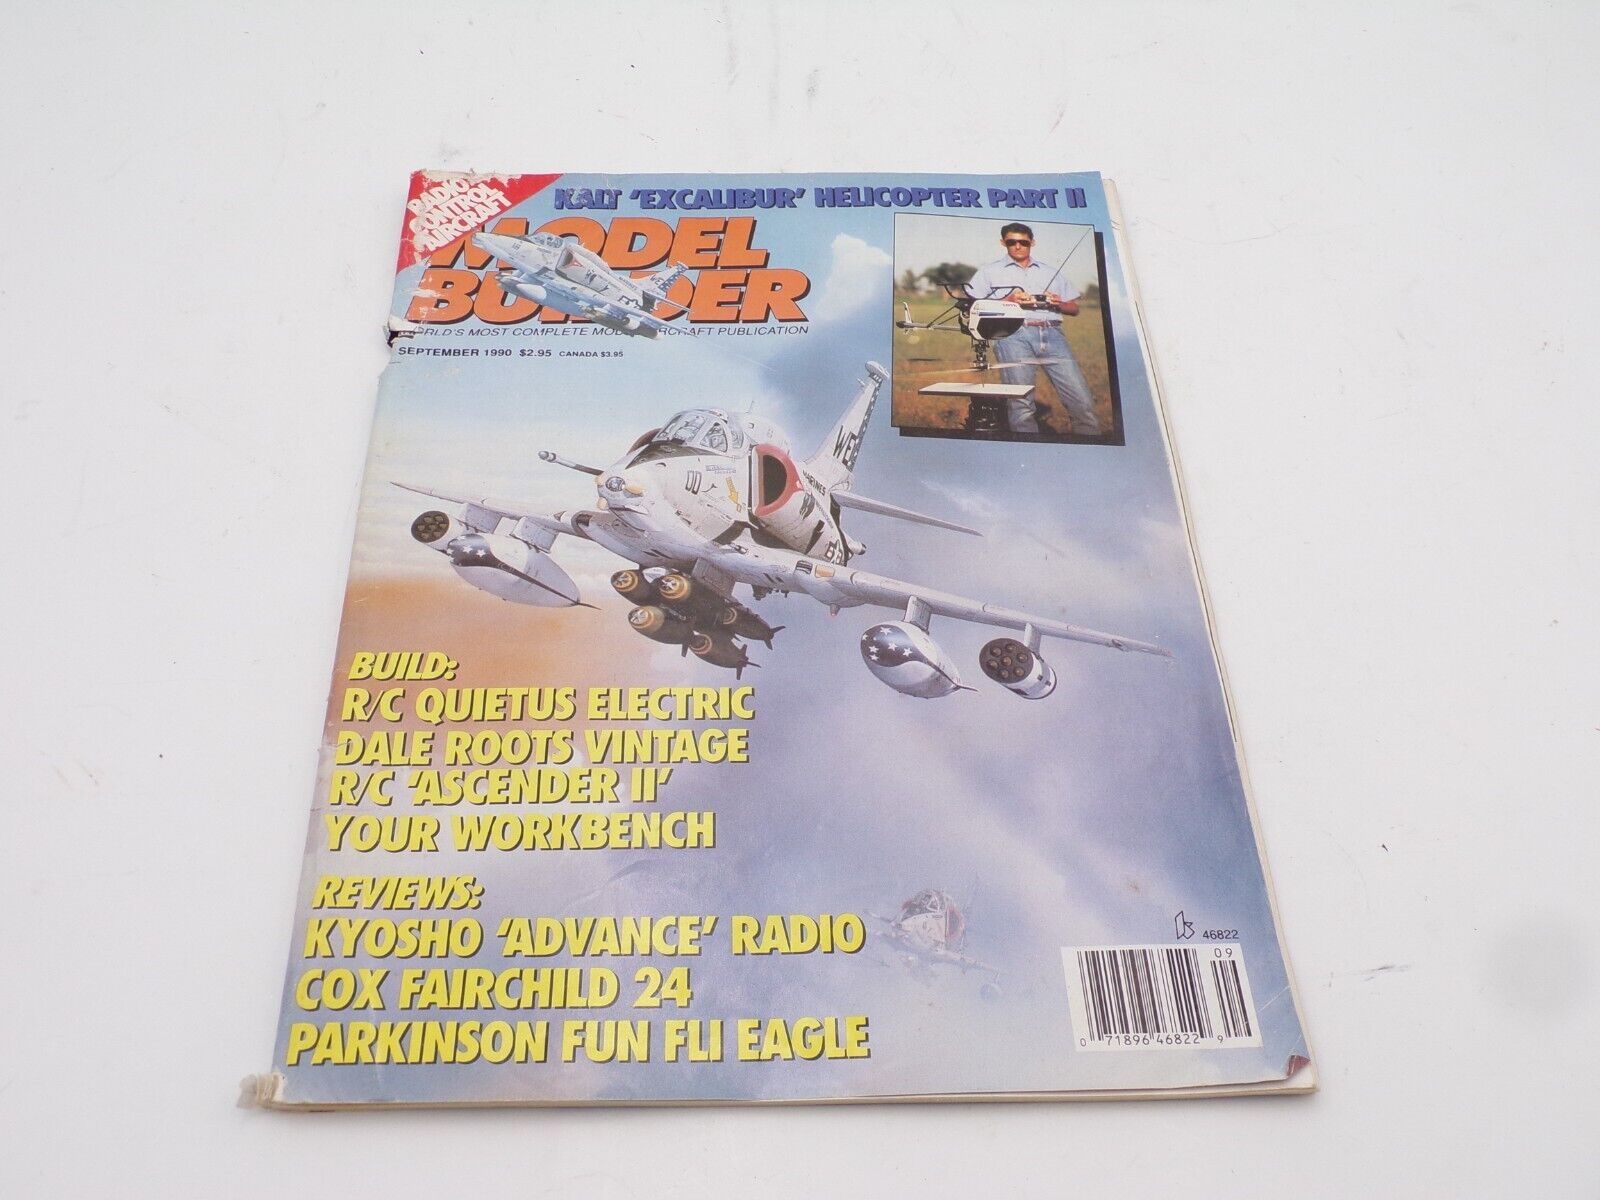 Vintage Model Builder Magazine September 1990